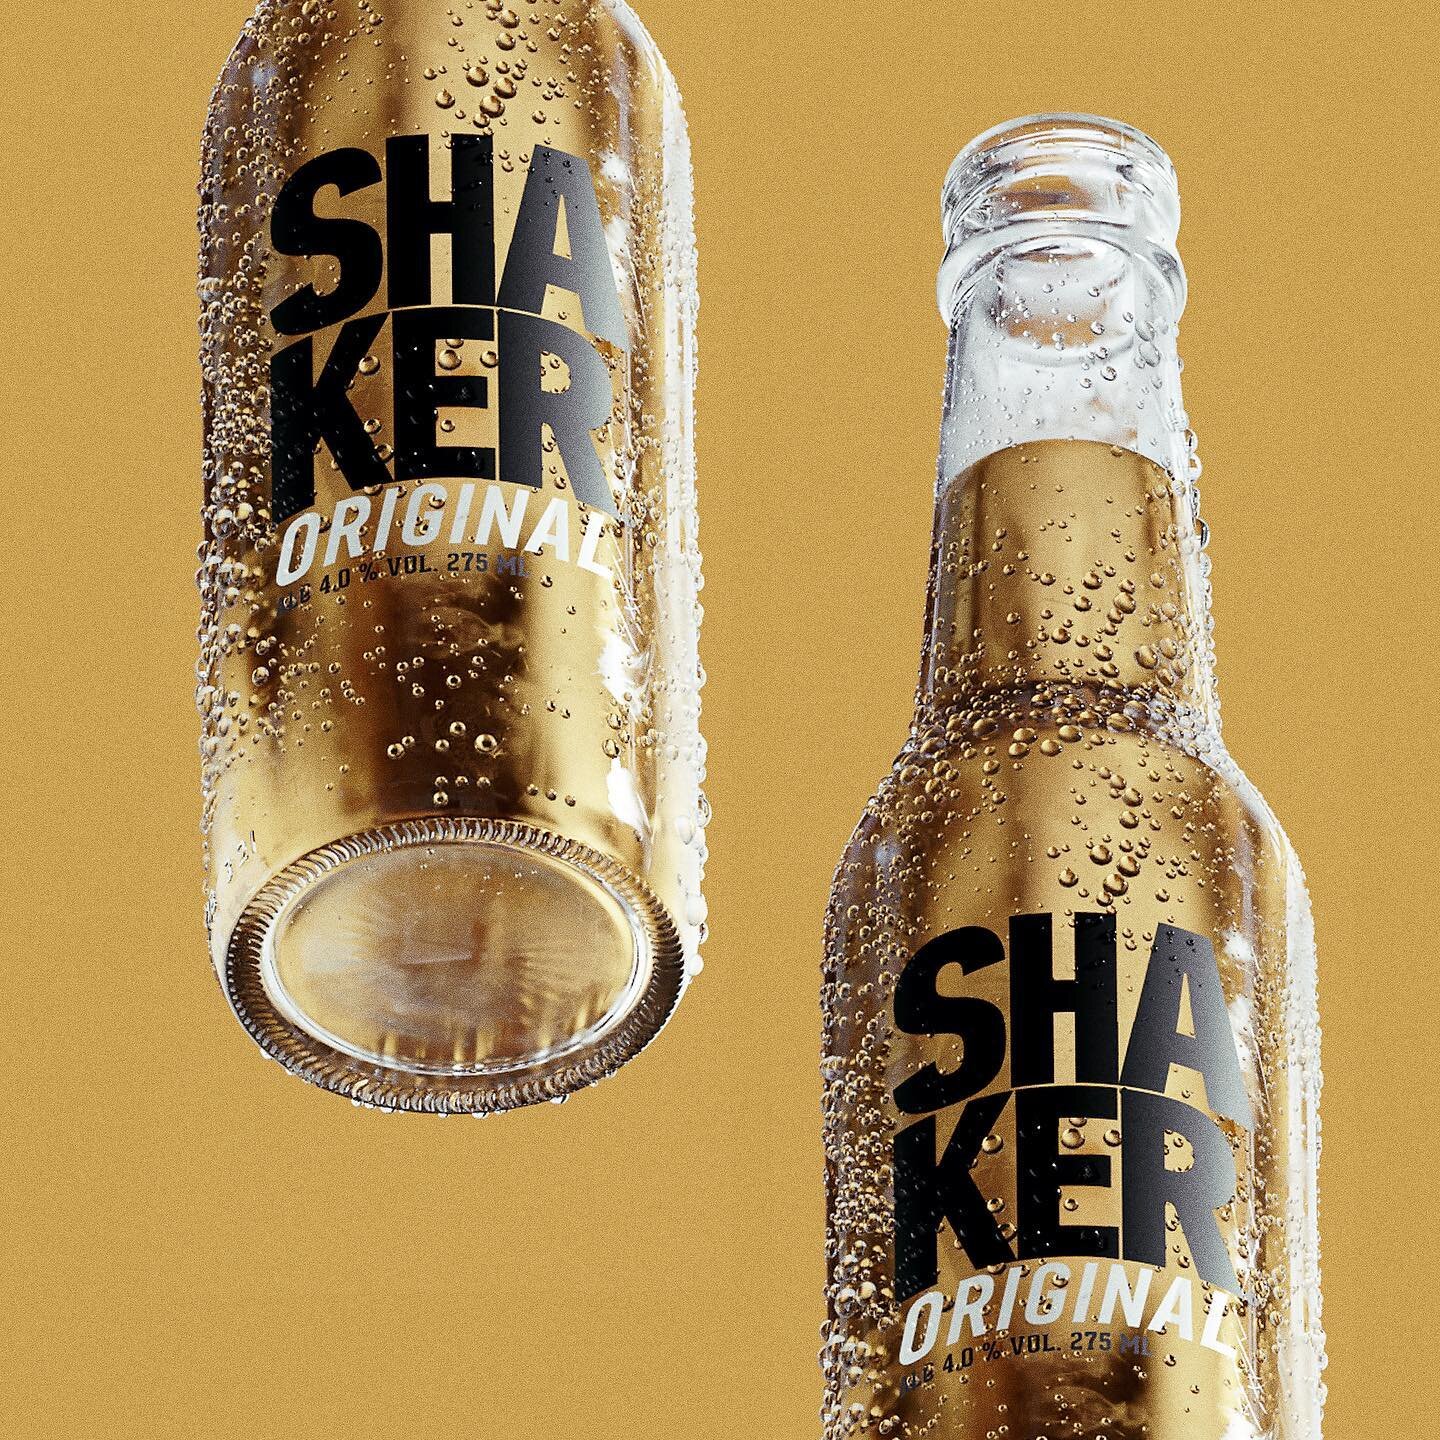 Still images from @shaker.shaker.shaker bottle cap campaign ⭐️💫👀 ⚫️⚪️ #blender #cinema4d #animation #advertising #3dmodeling #3dvisuals #simulation